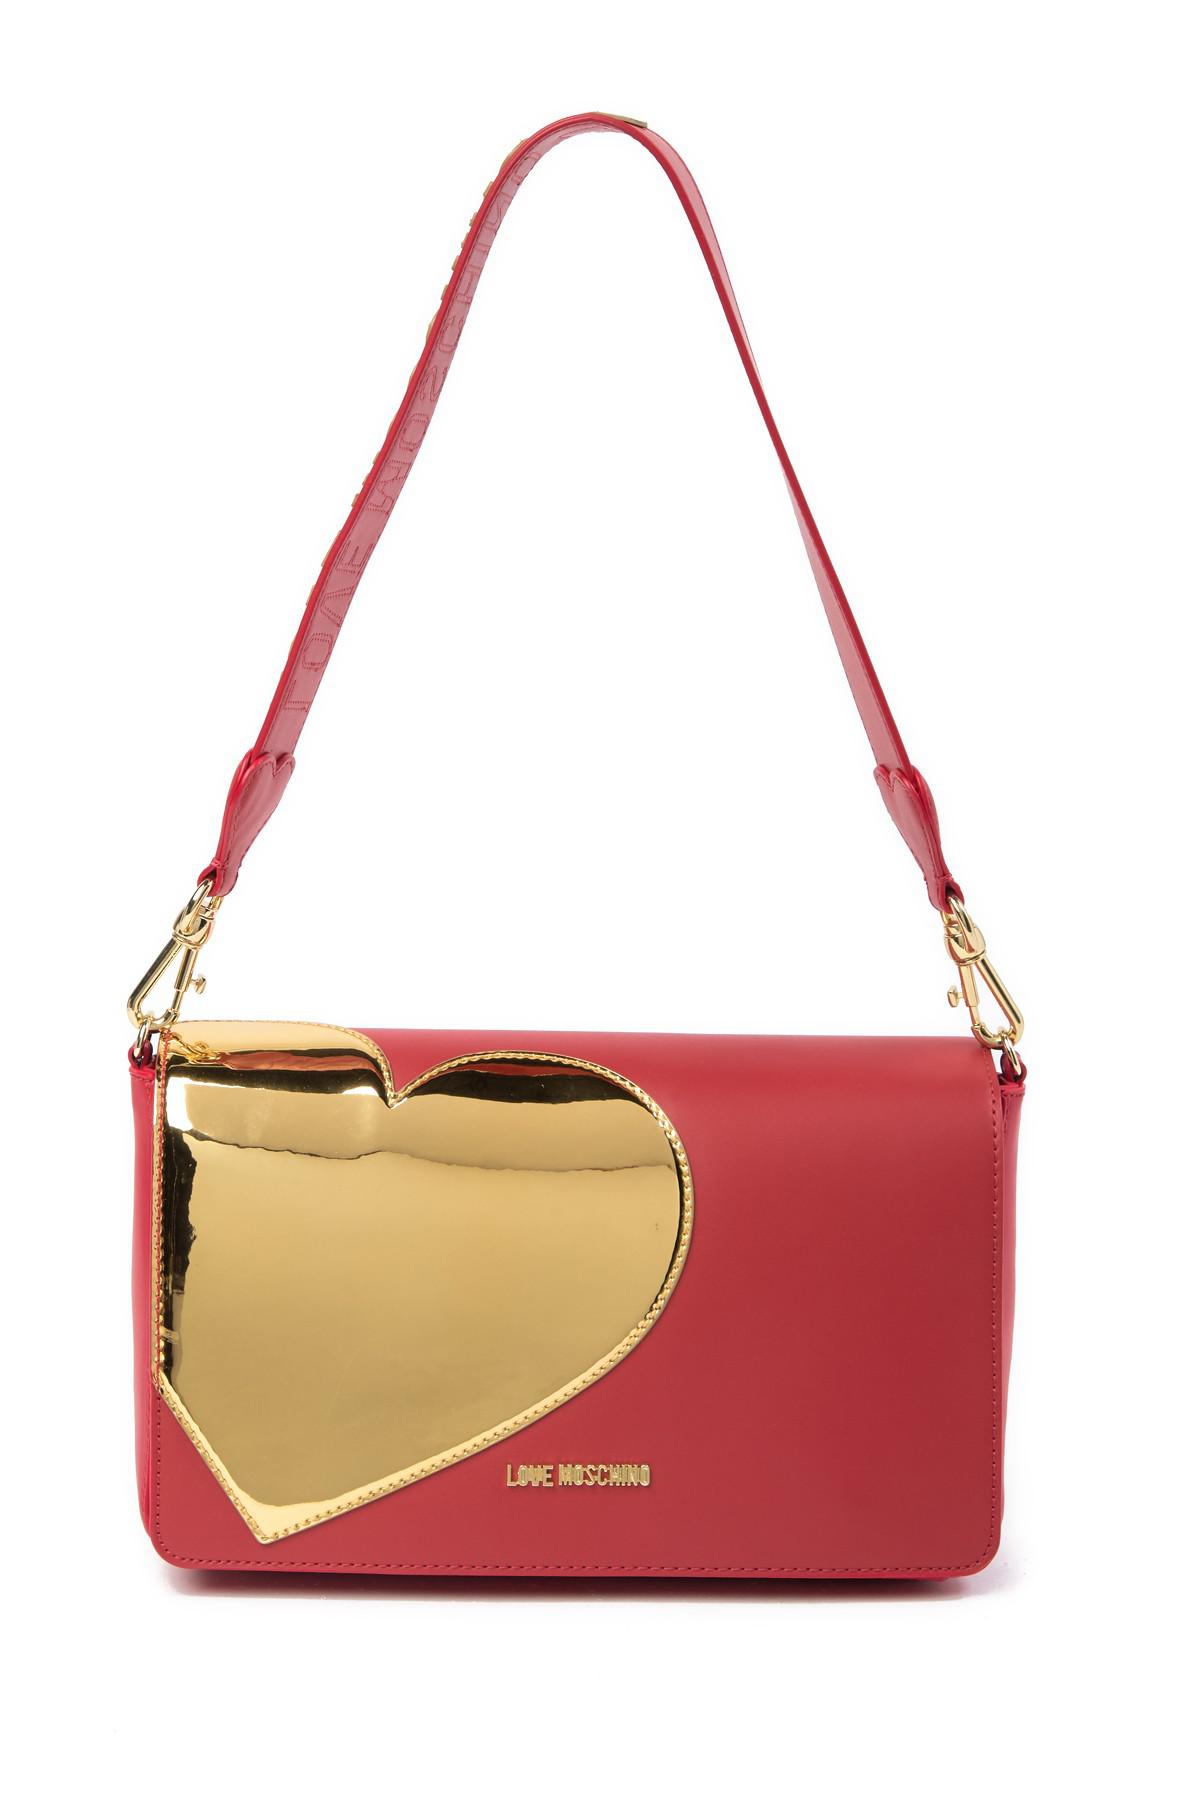 love moschino red clutch bag